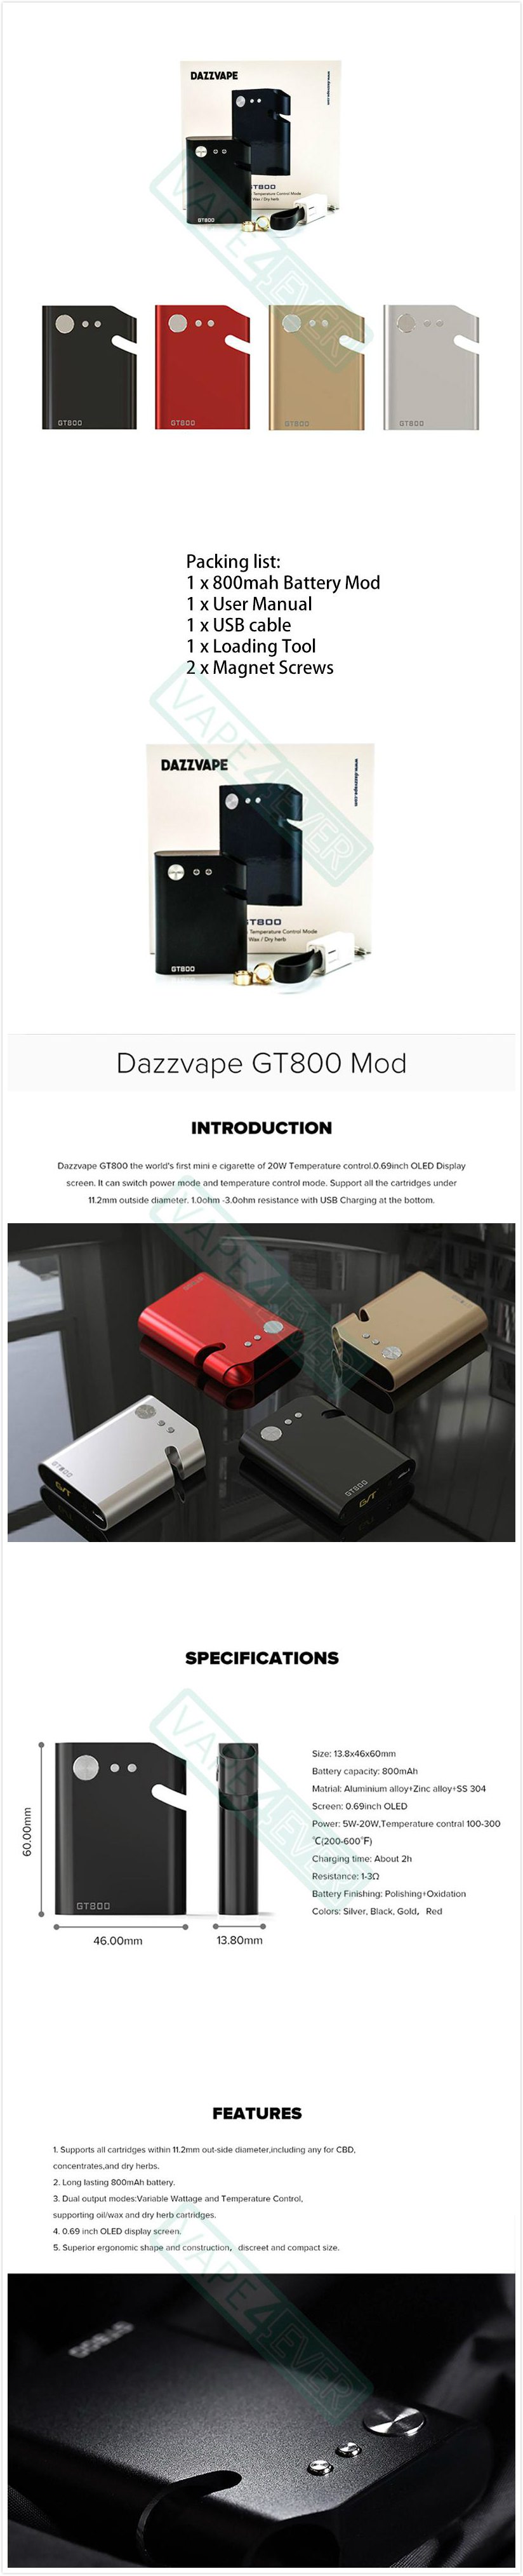 DazzVape GT800 Vaporizer Mod 800mAh VW/TC Modes Box For Oil/Wax/Dry Herb Instruction